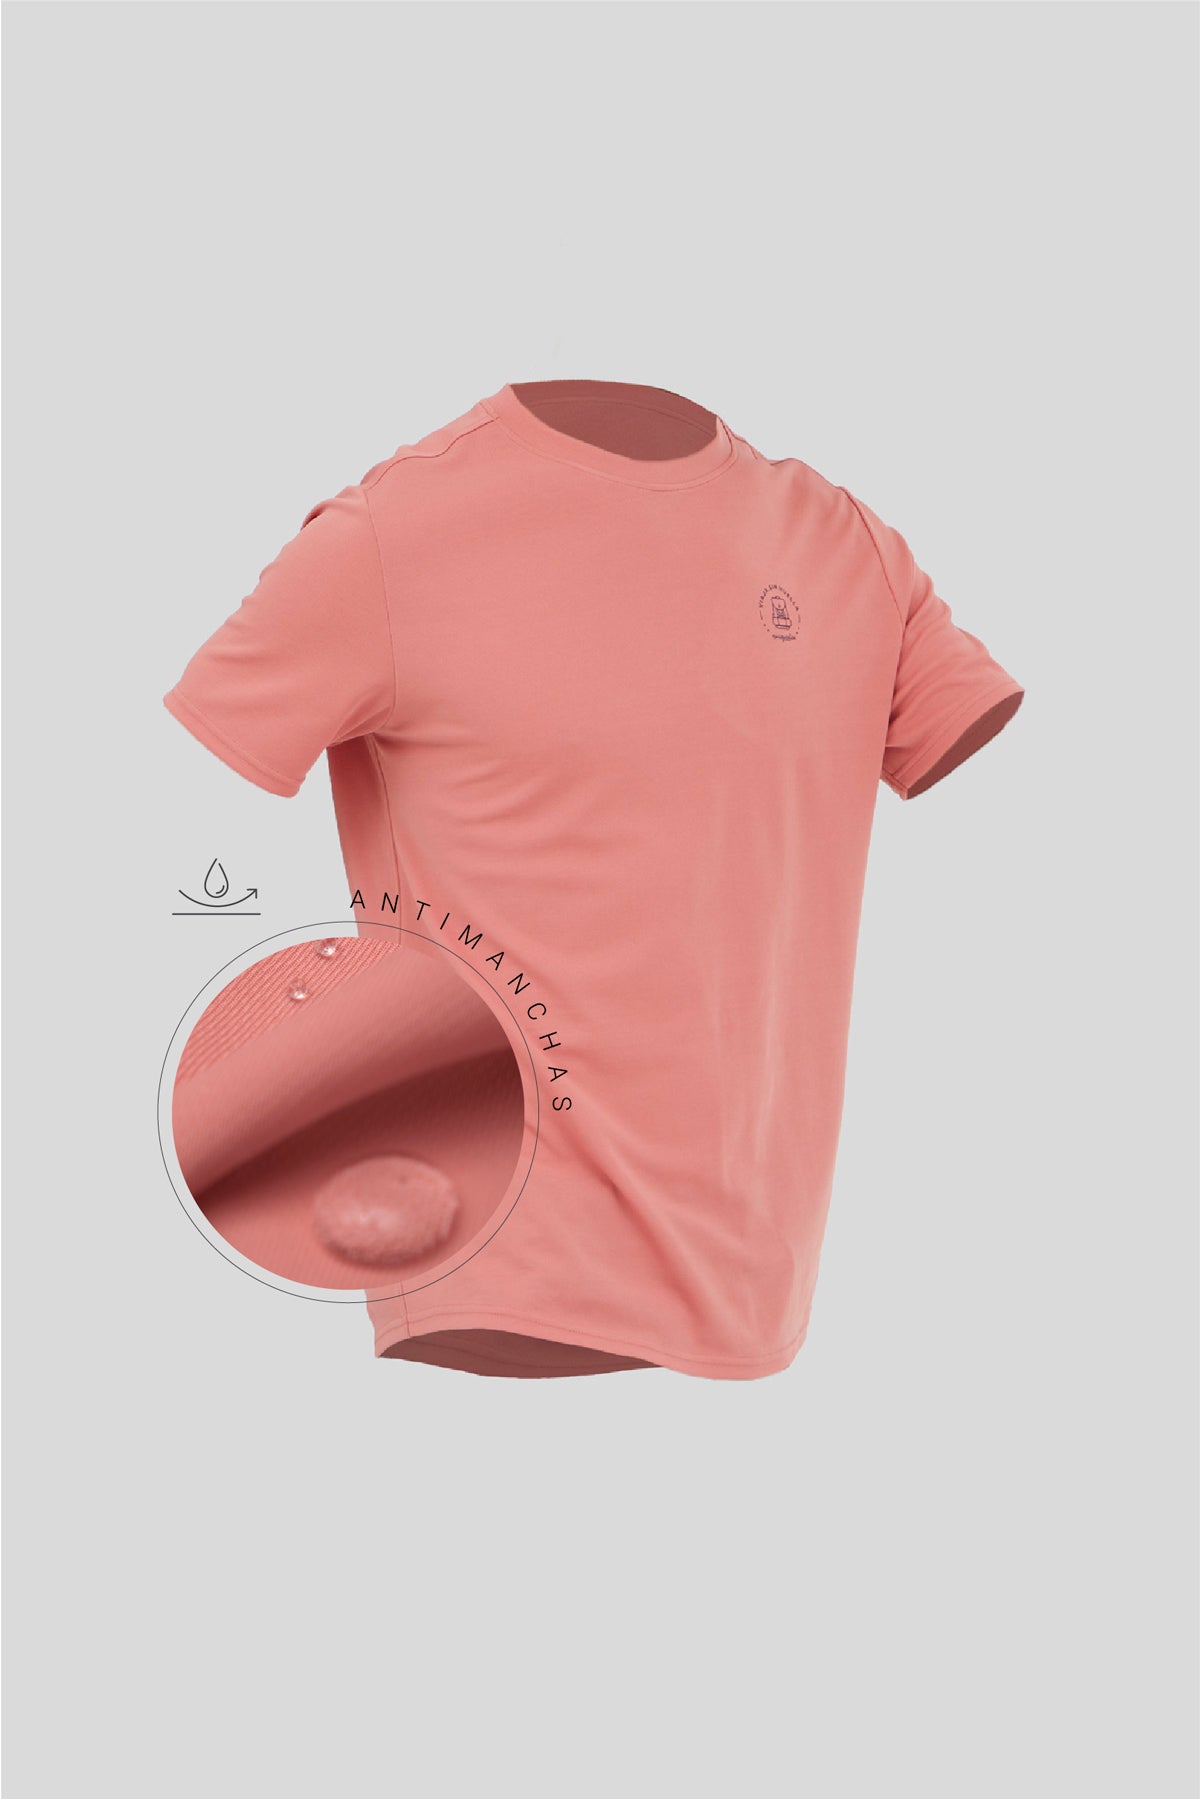 Camiseta hombre cobre | Enrique Alex